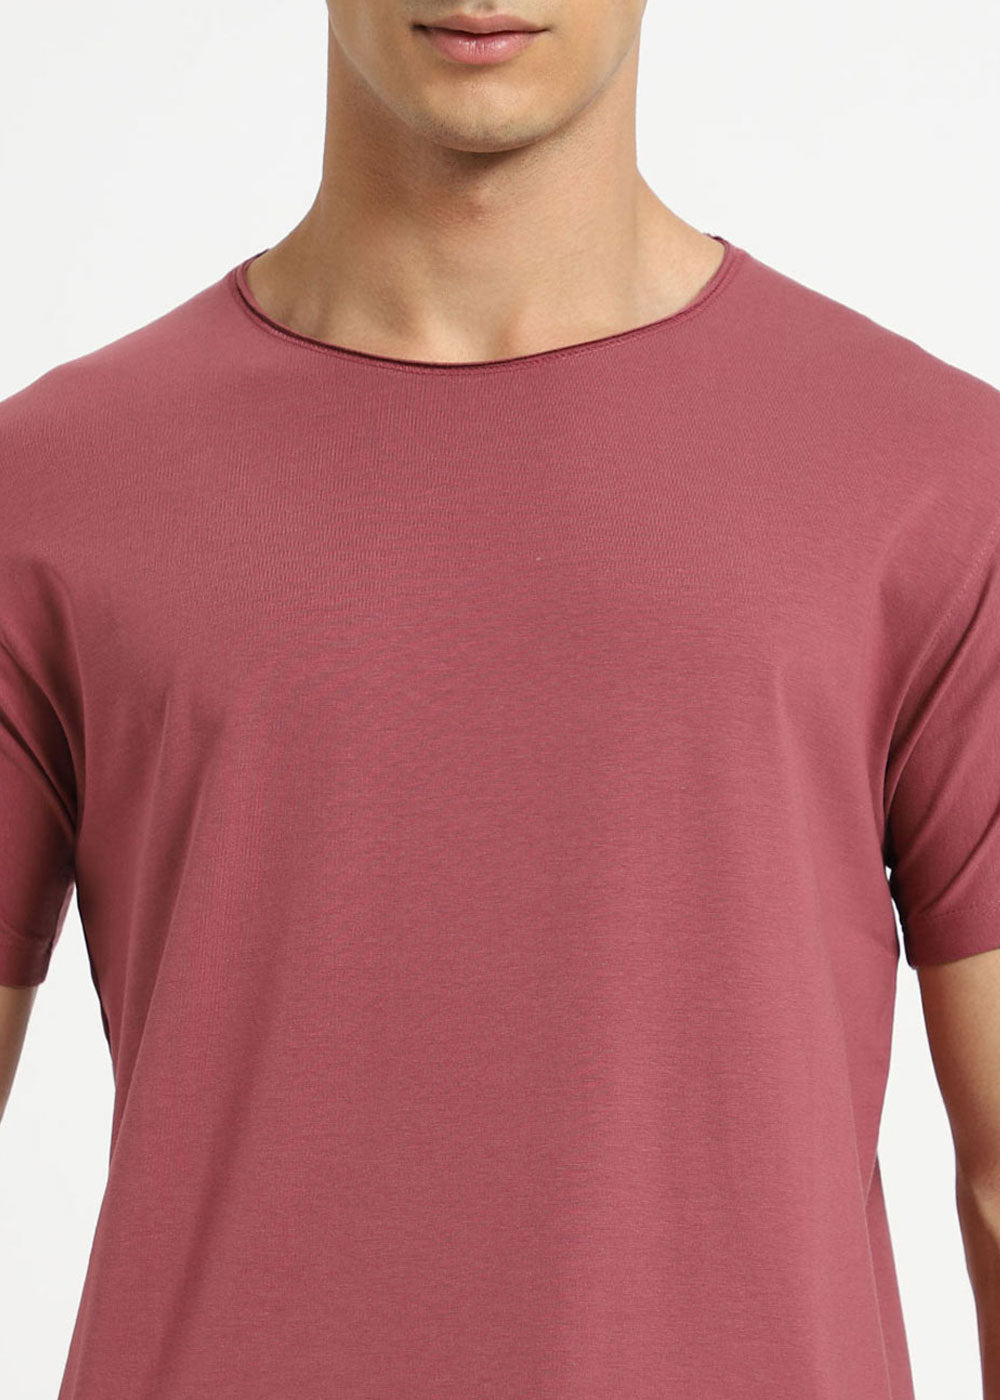 Salmon Pink Crew neck T-shirt